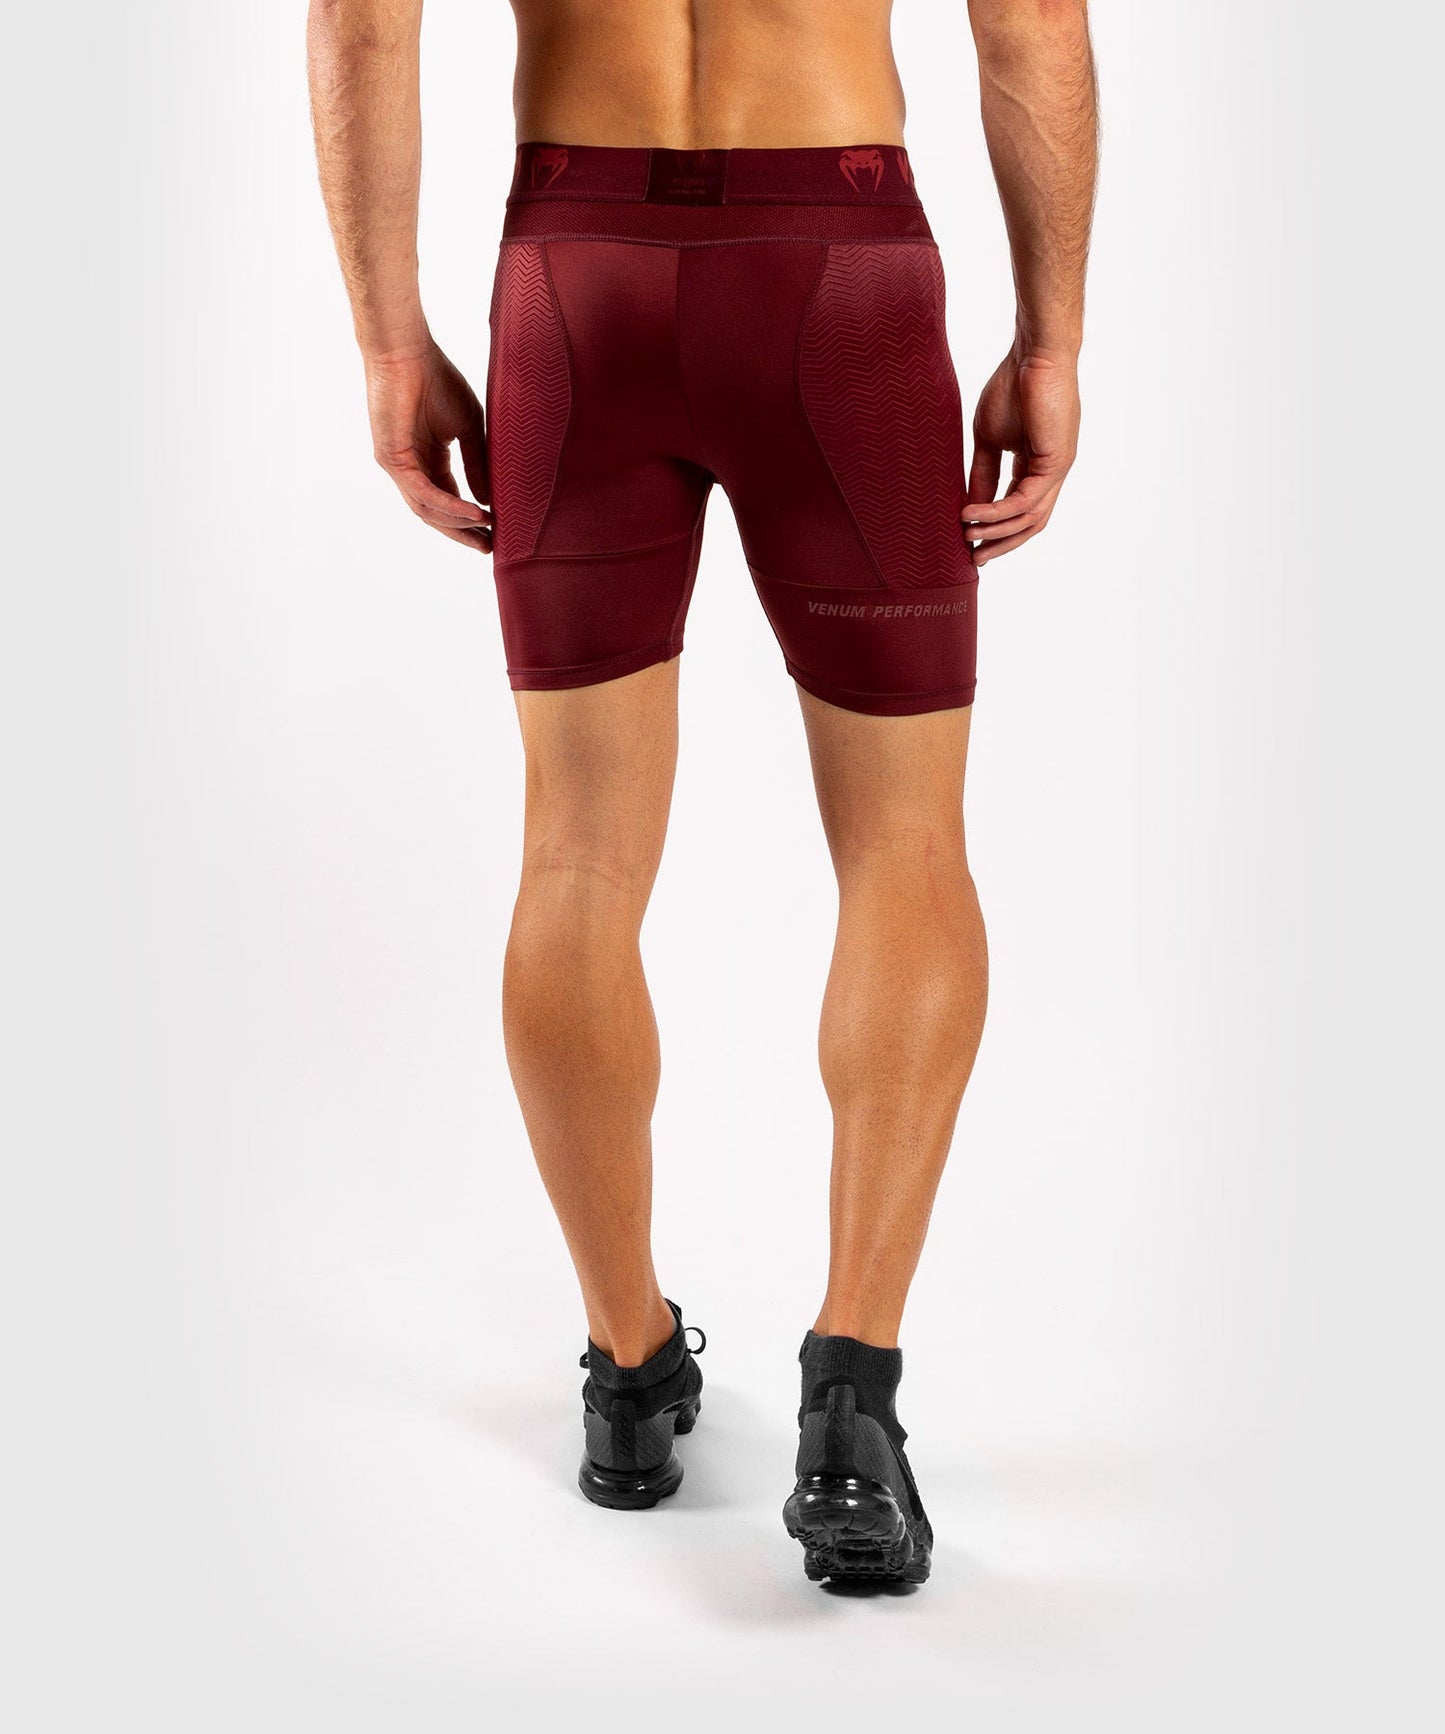 Venum G-Fit Compression Shorts - Burgundy